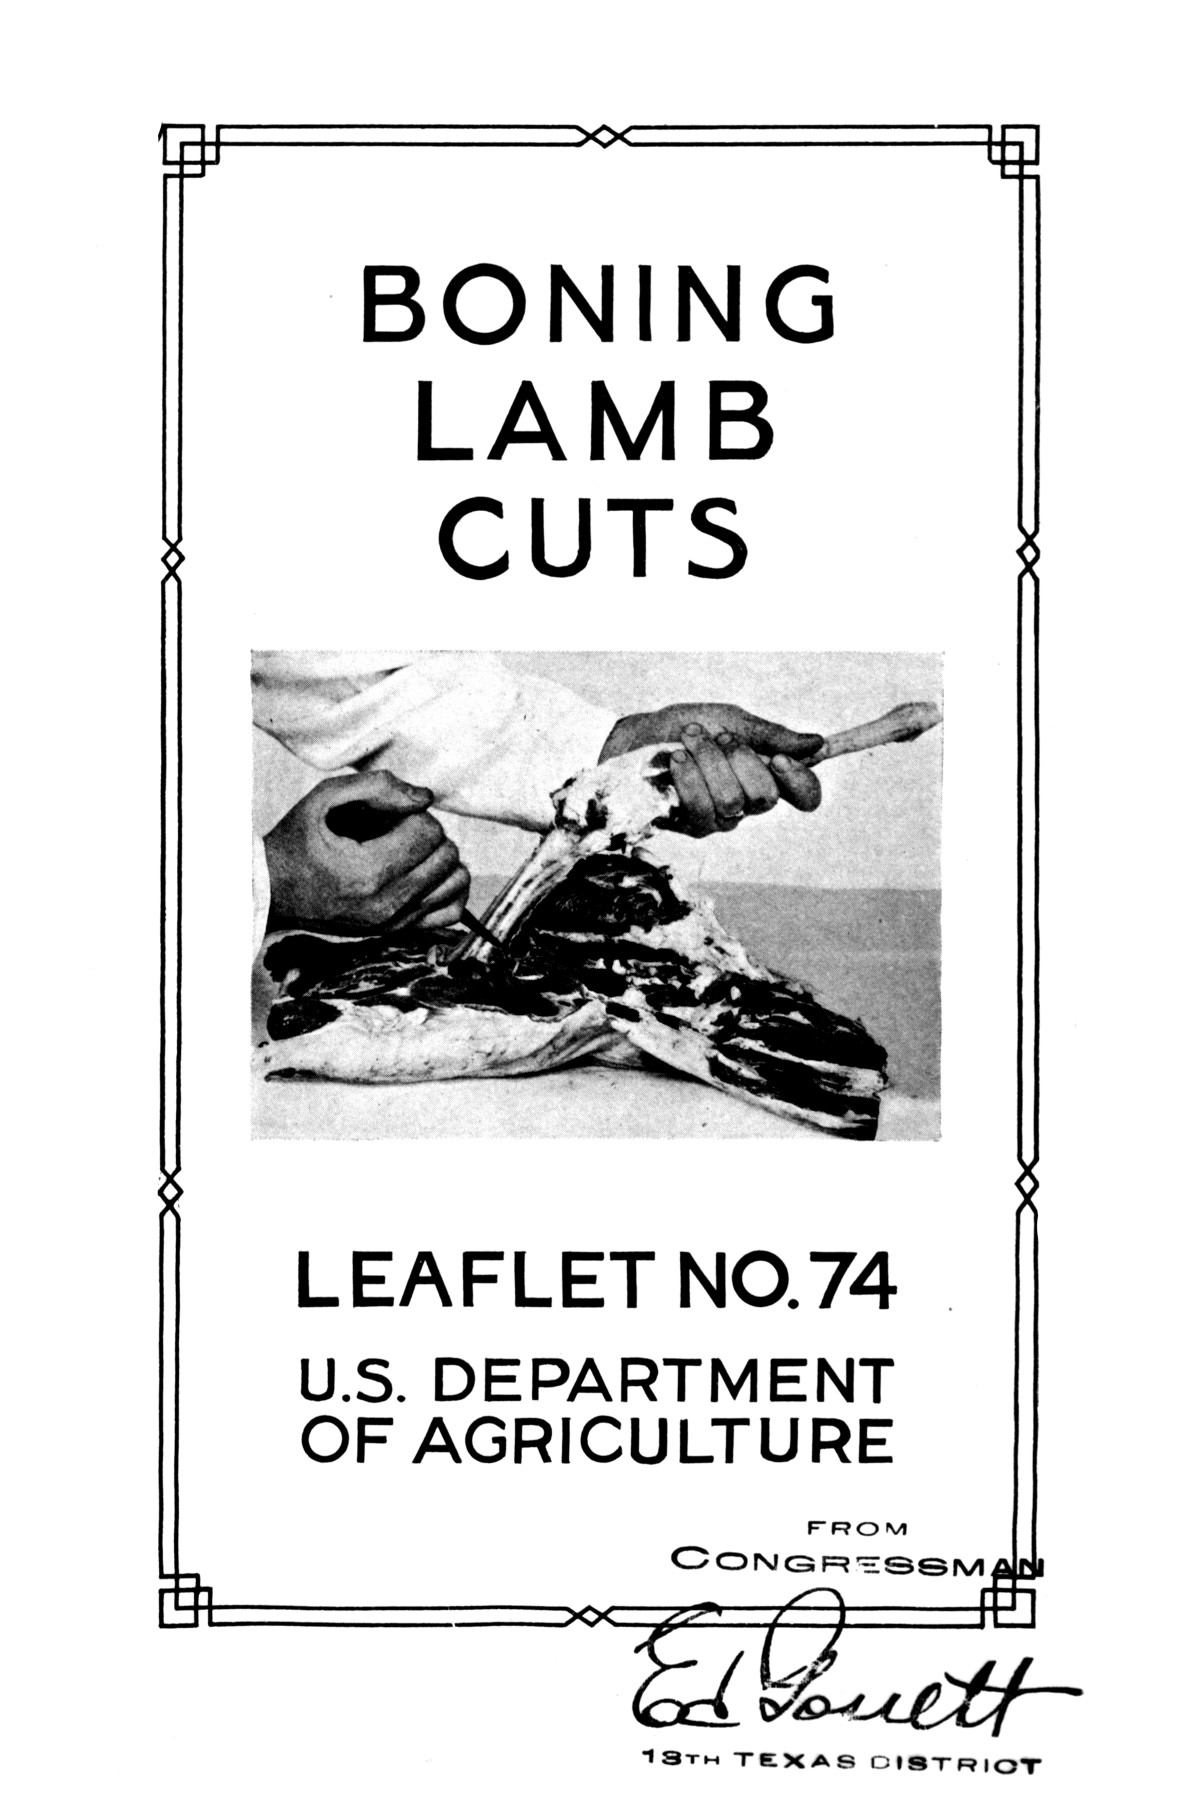 Boning Lamb Cuts.
                                                
                                                    1
                                                